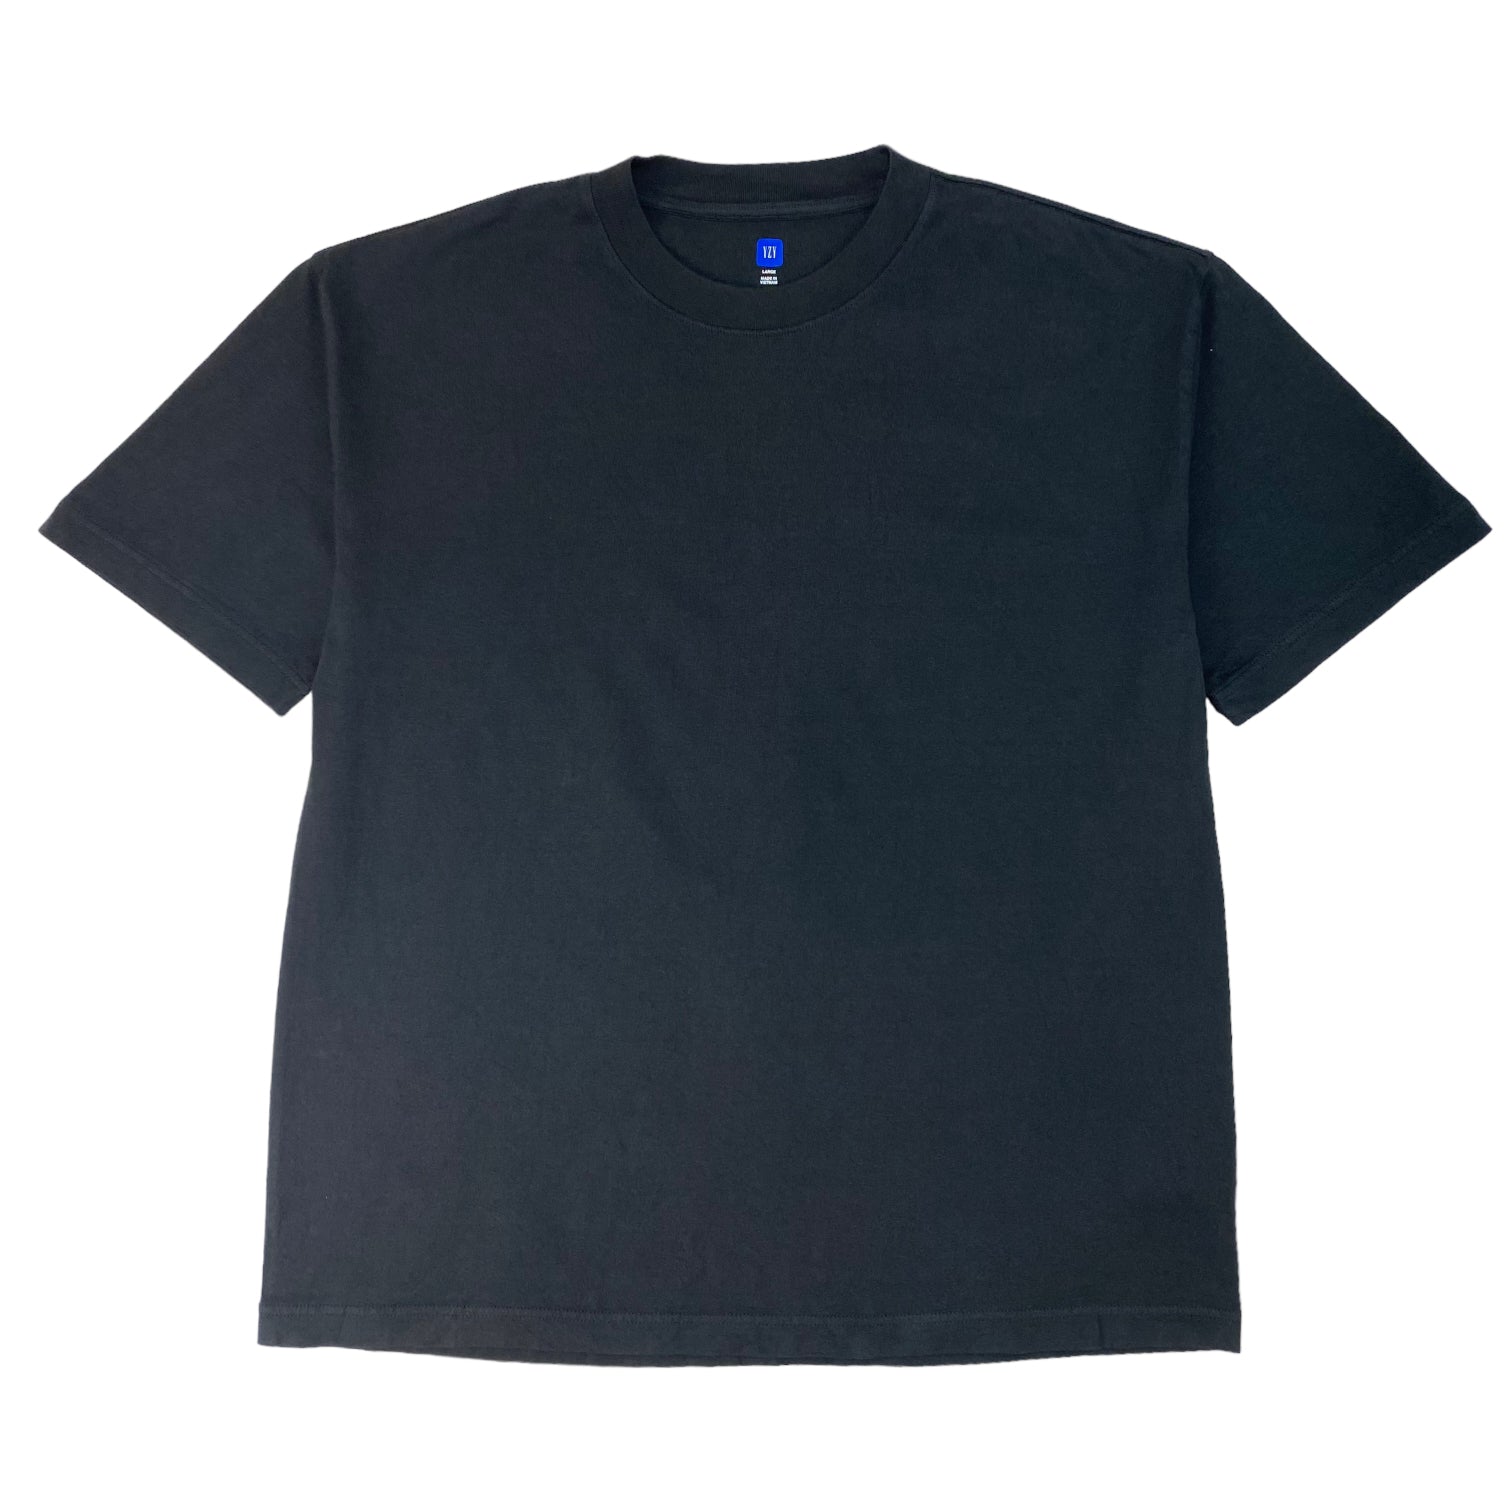 Yeezy x Gap Black Unreleased Shirt - Black Shirt